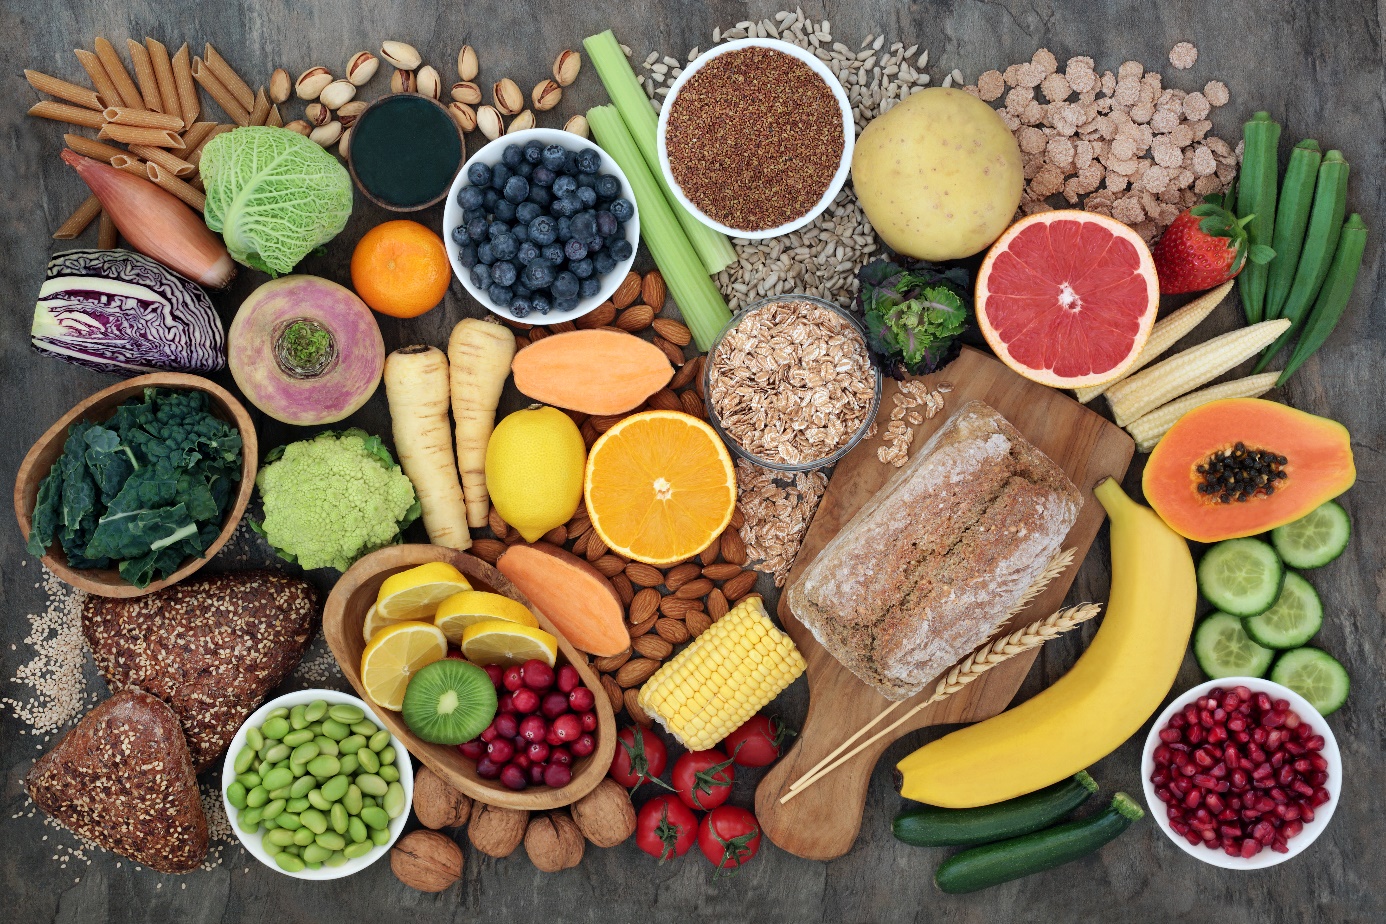 Sources of fibre and vitamin A